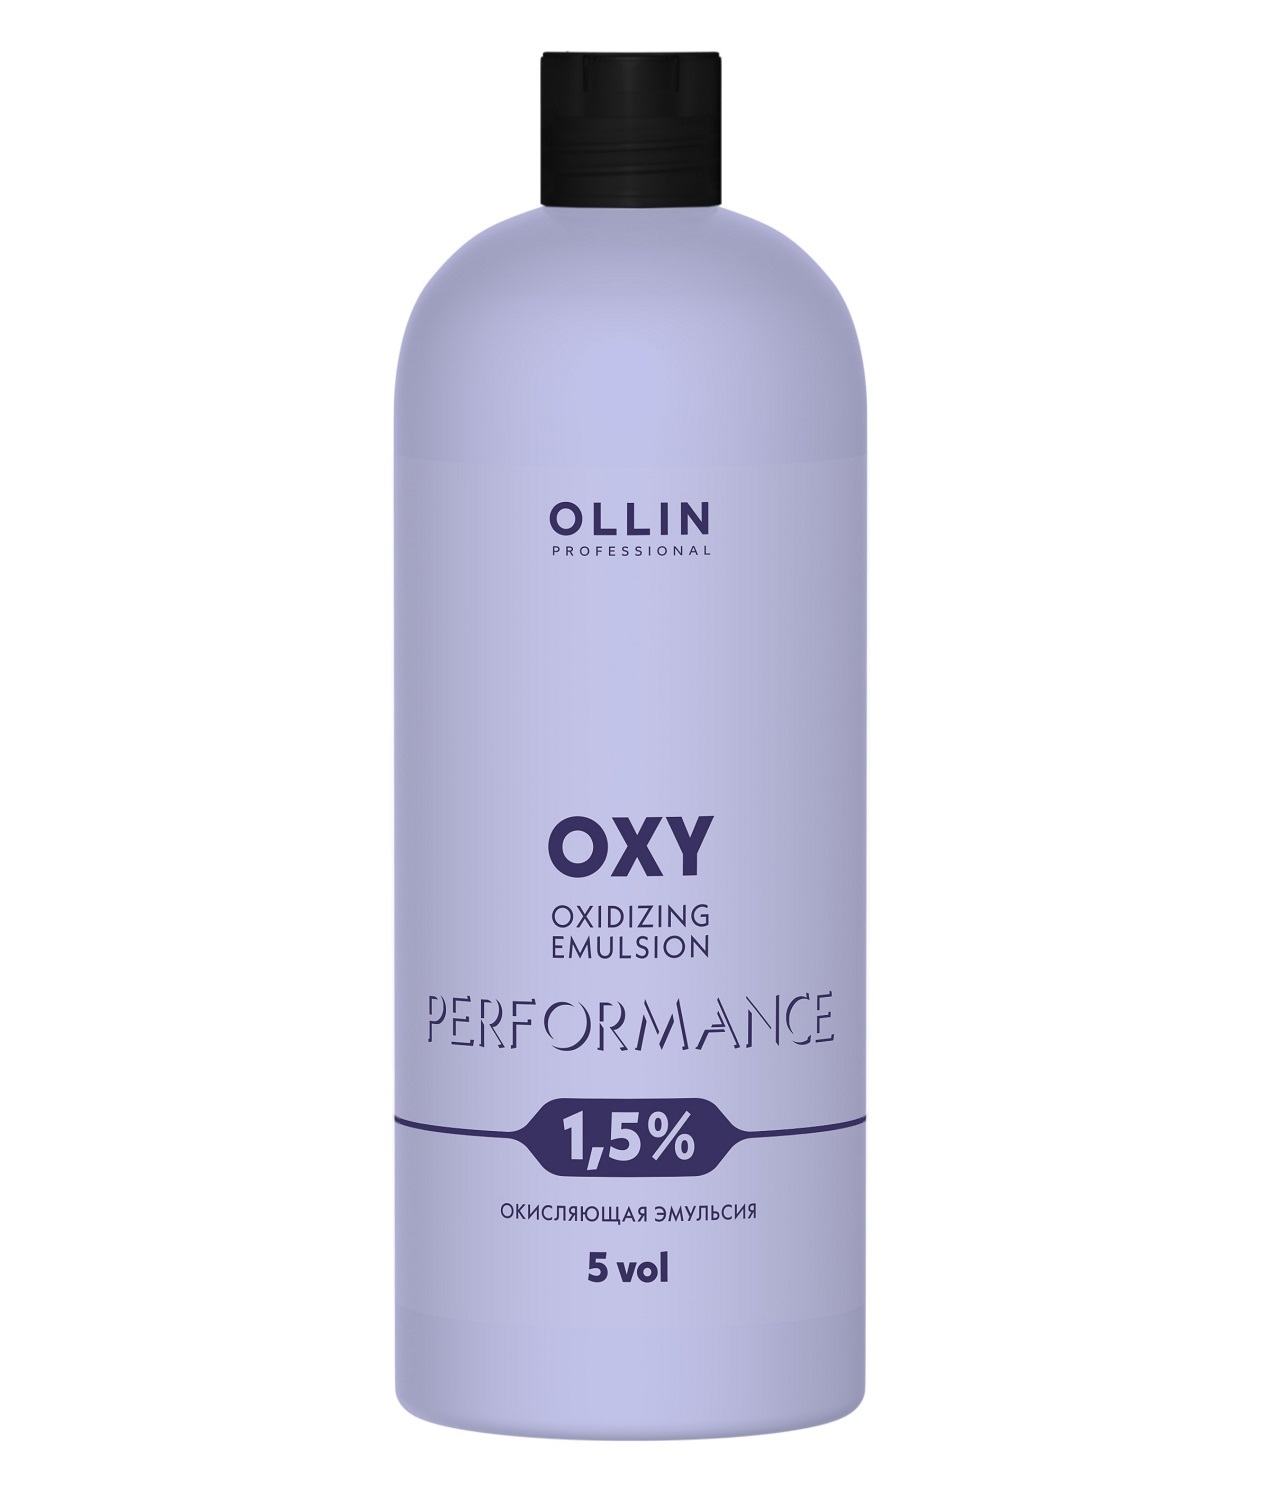 Ollin Professional Окисляющая эмульсия 1,5% 5 vol, 1000 мл (Ollin Professional, Performance)